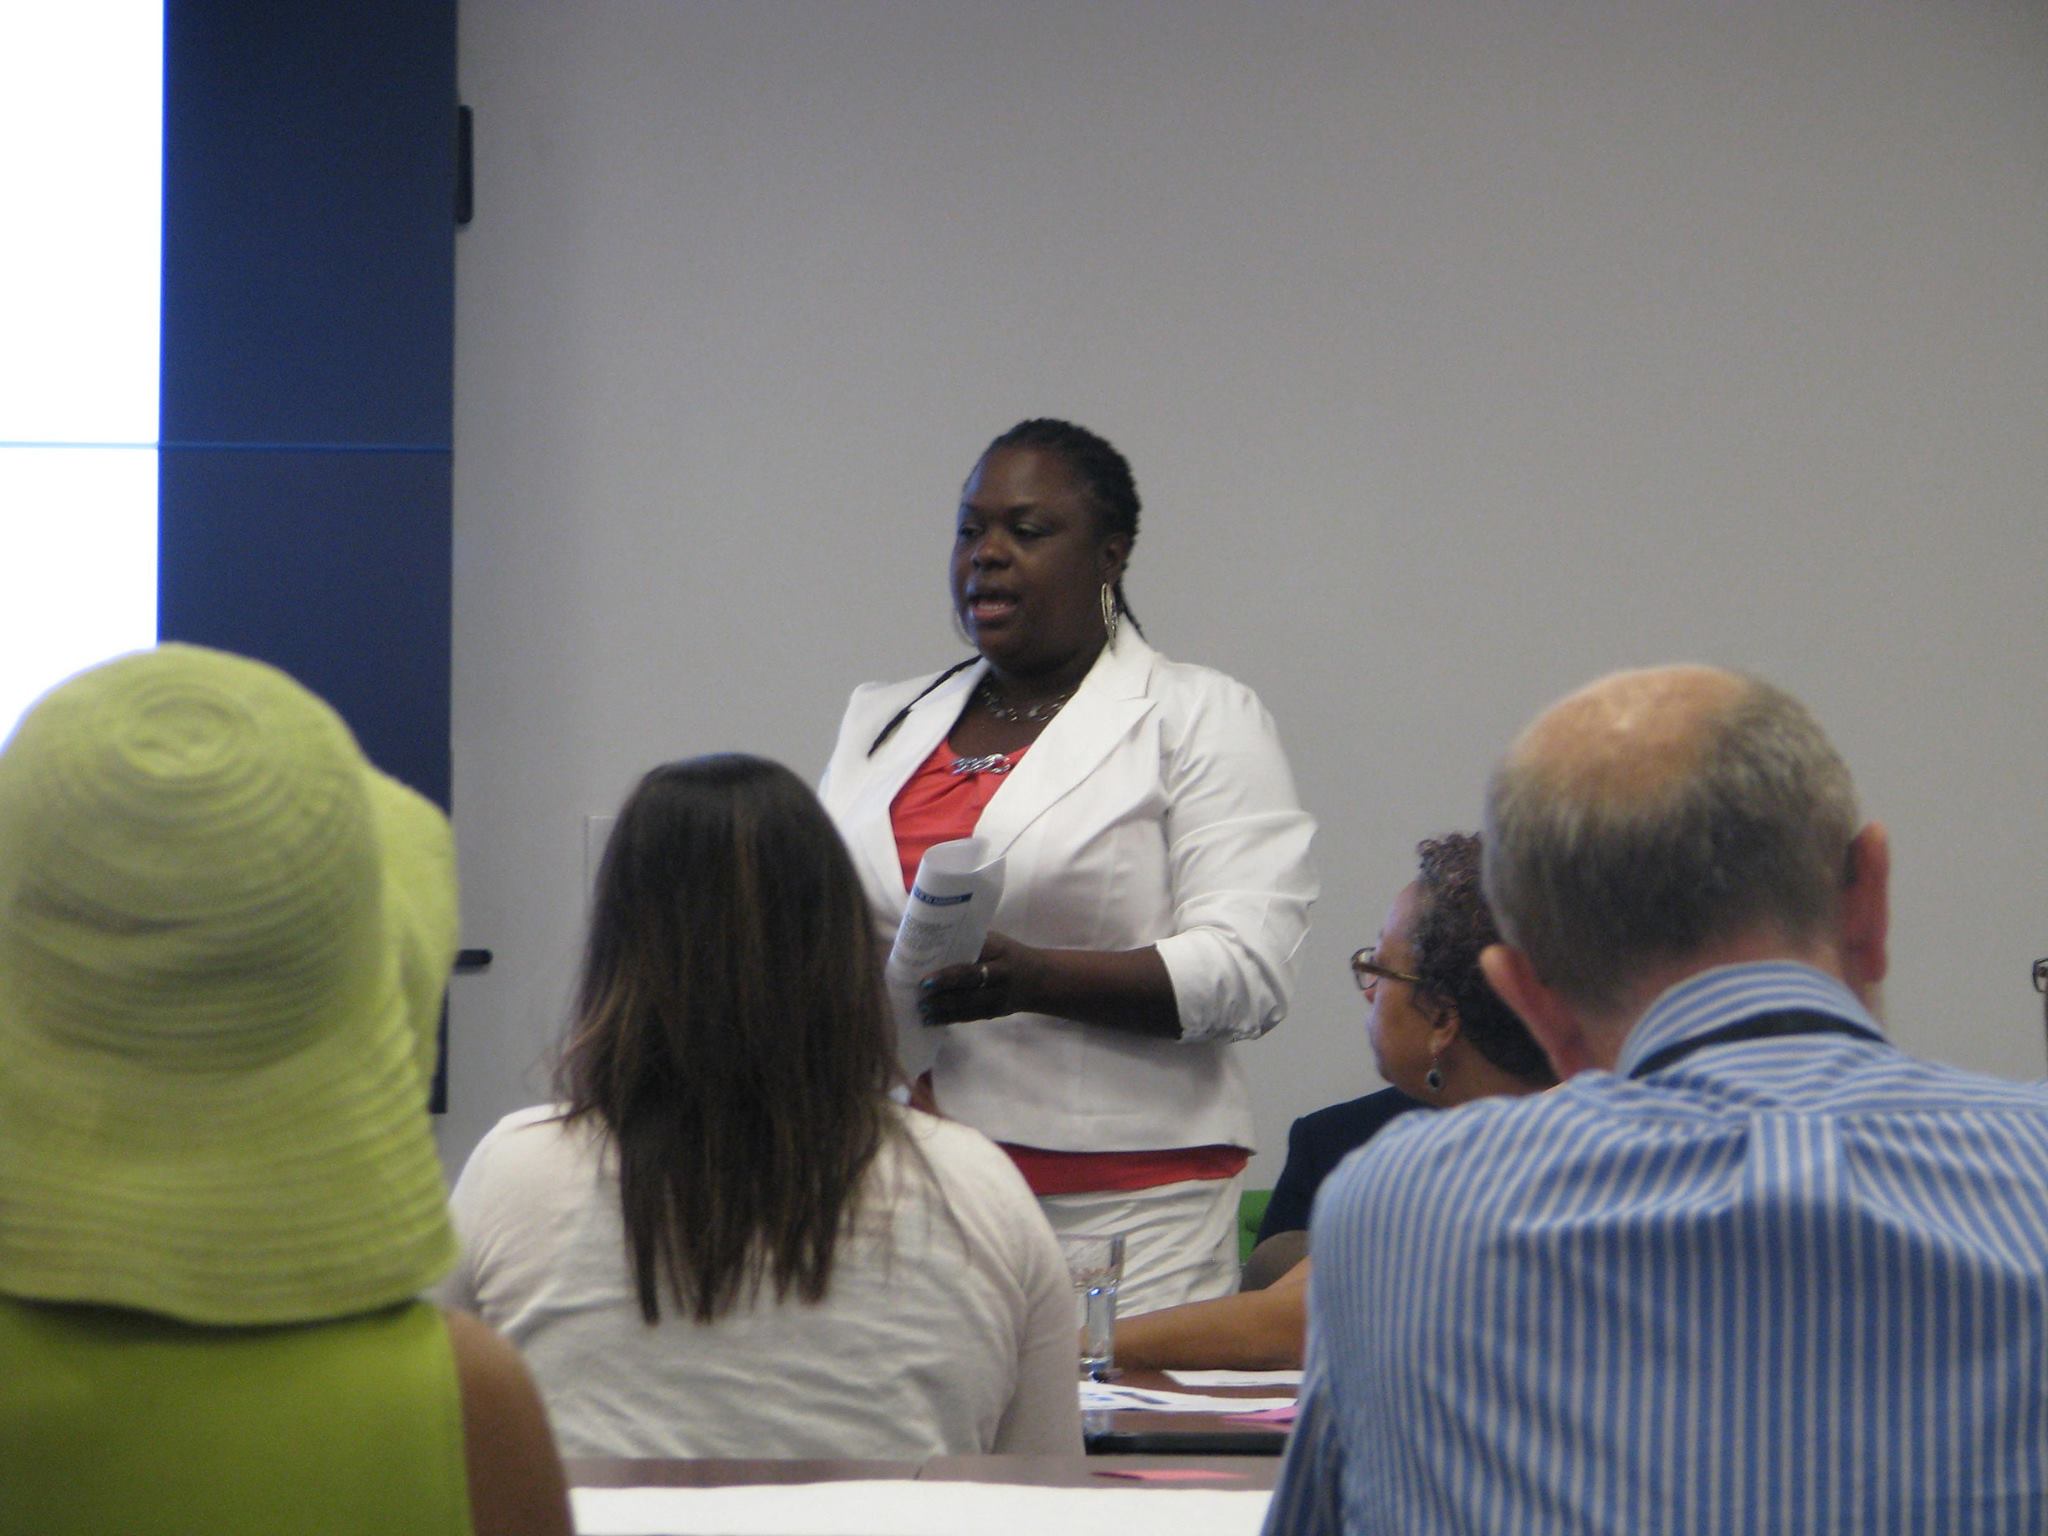 YWCA Greater Charleston Executive Director LaVanda Brown spoke on exploring race in America.